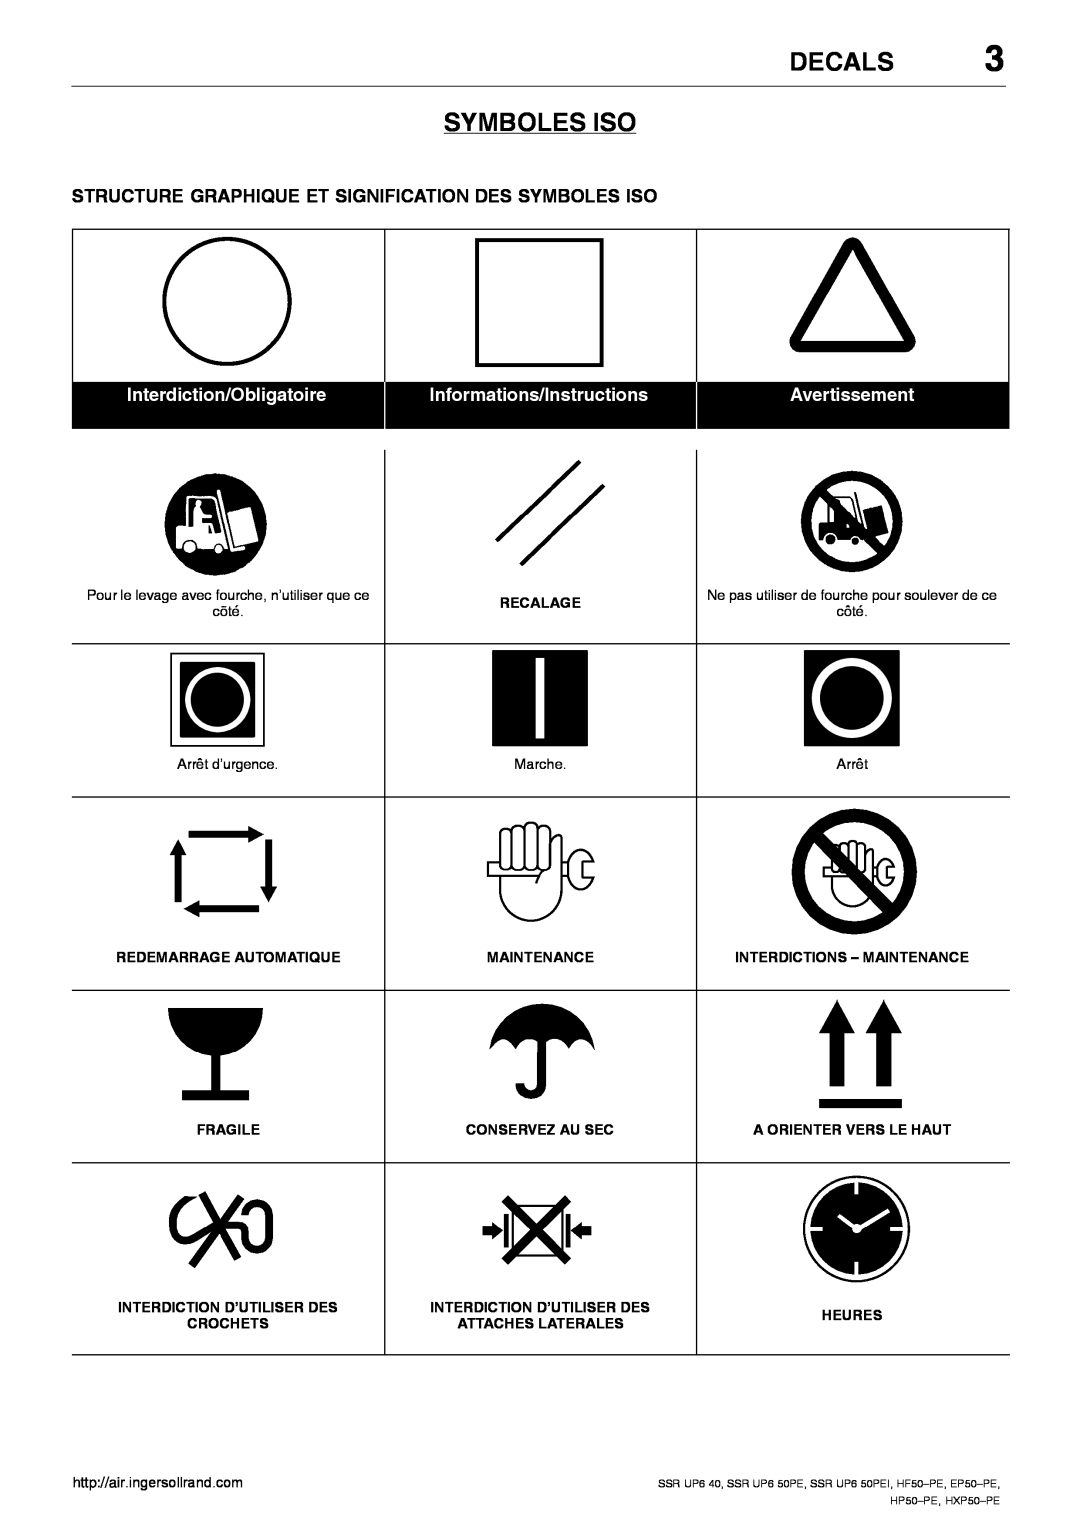 Ingersoll-Rand HP50-PE, EP50-PE Decals Symboles Iso, Structure Graphique Et Signification Des Symboles Iso, Avertissement 